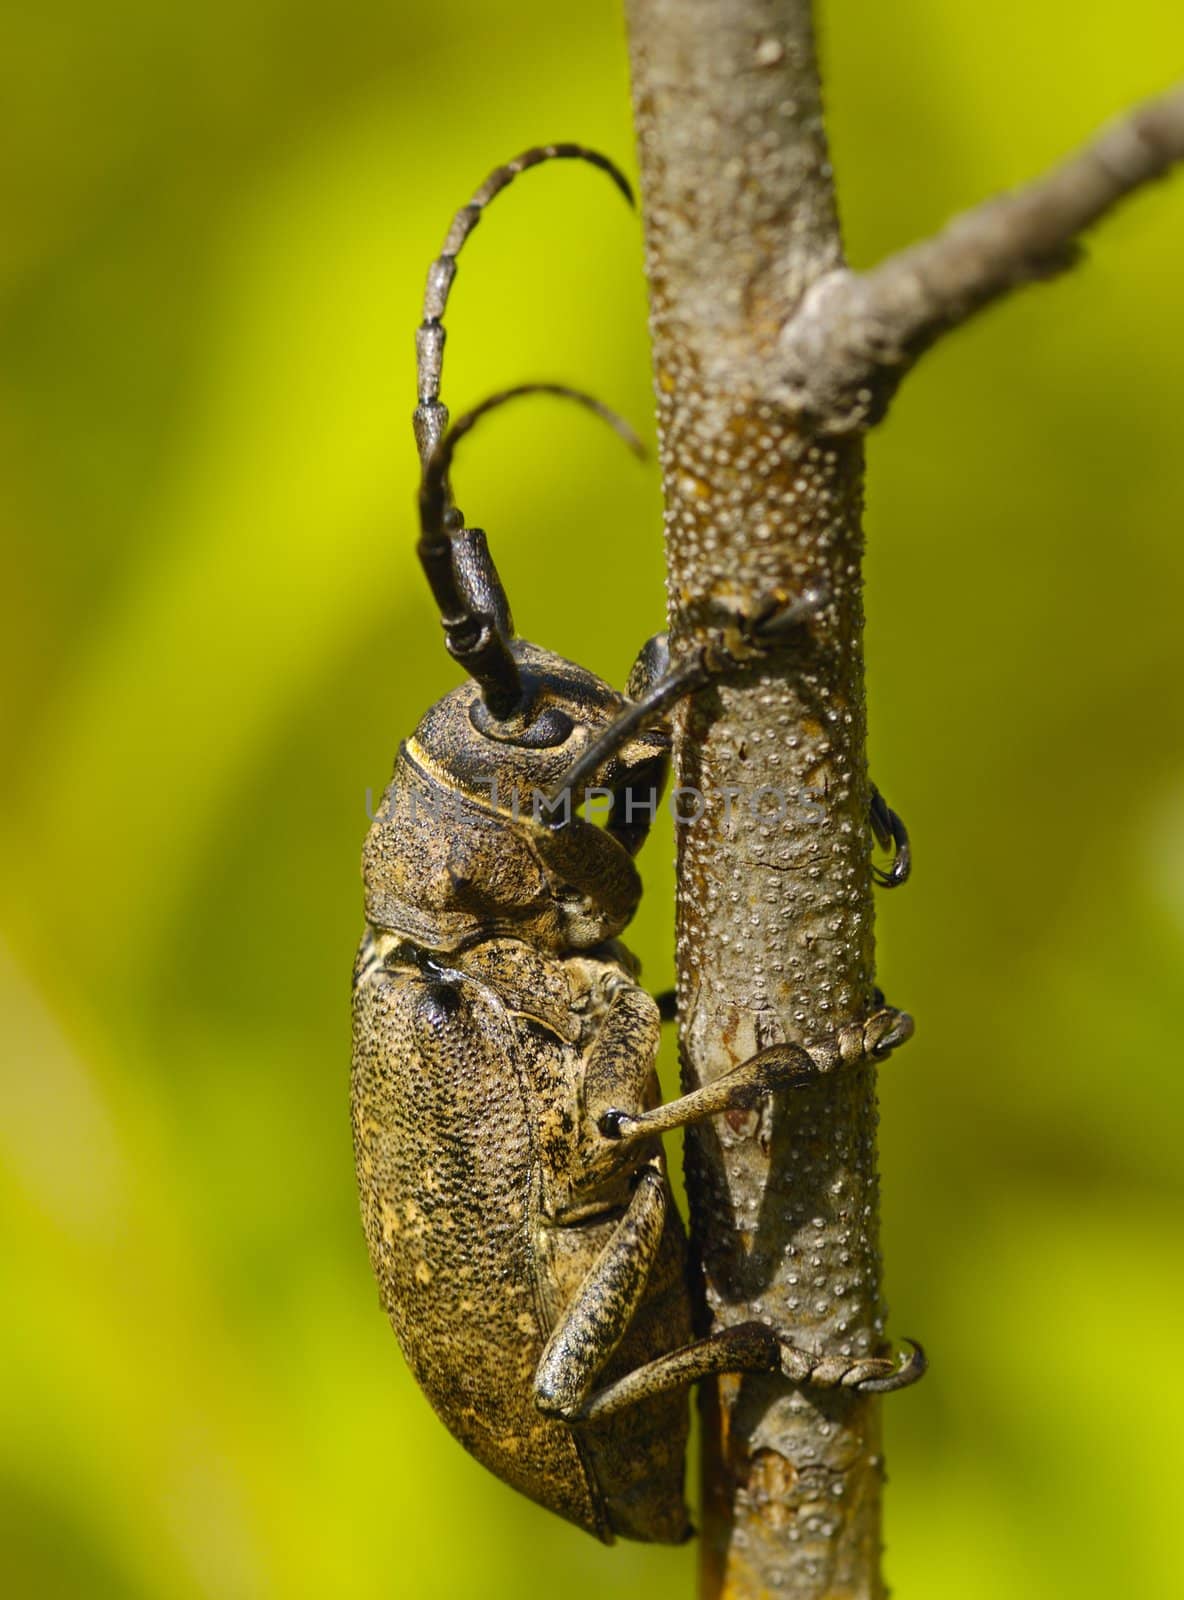 Brown large bug on a bush branch